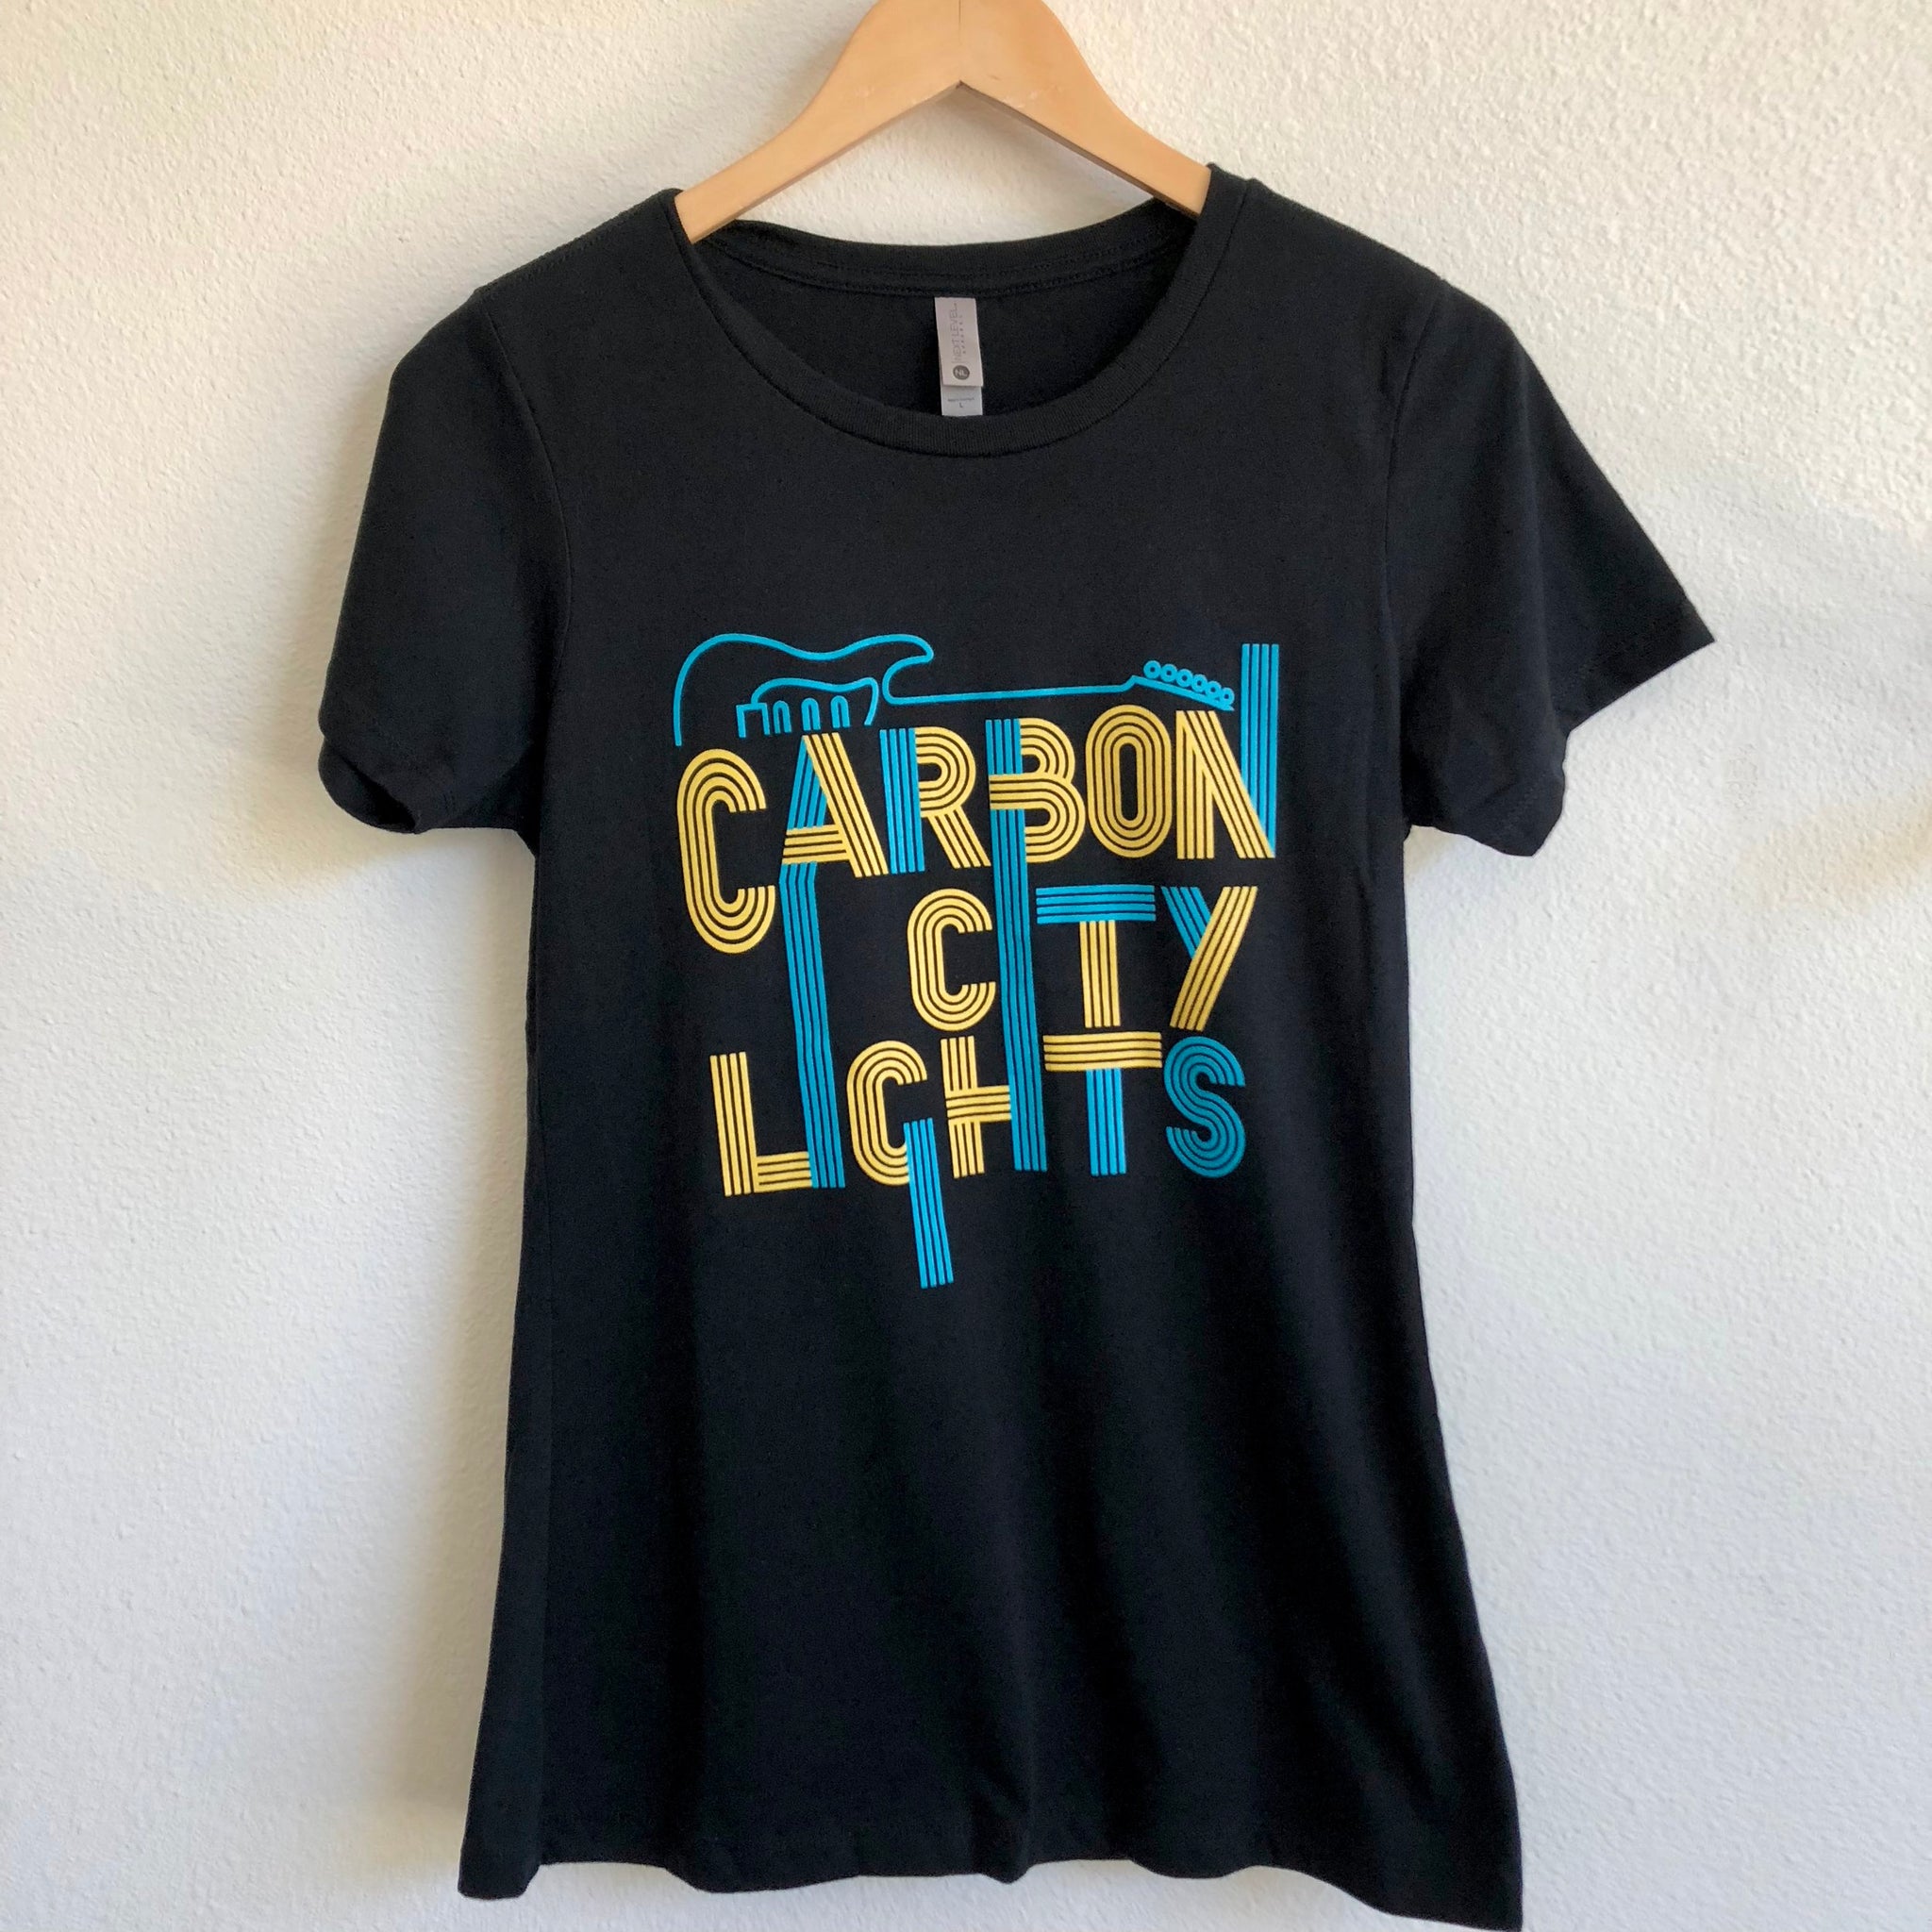 Women's Black T-Shirt - Carbon City Lights